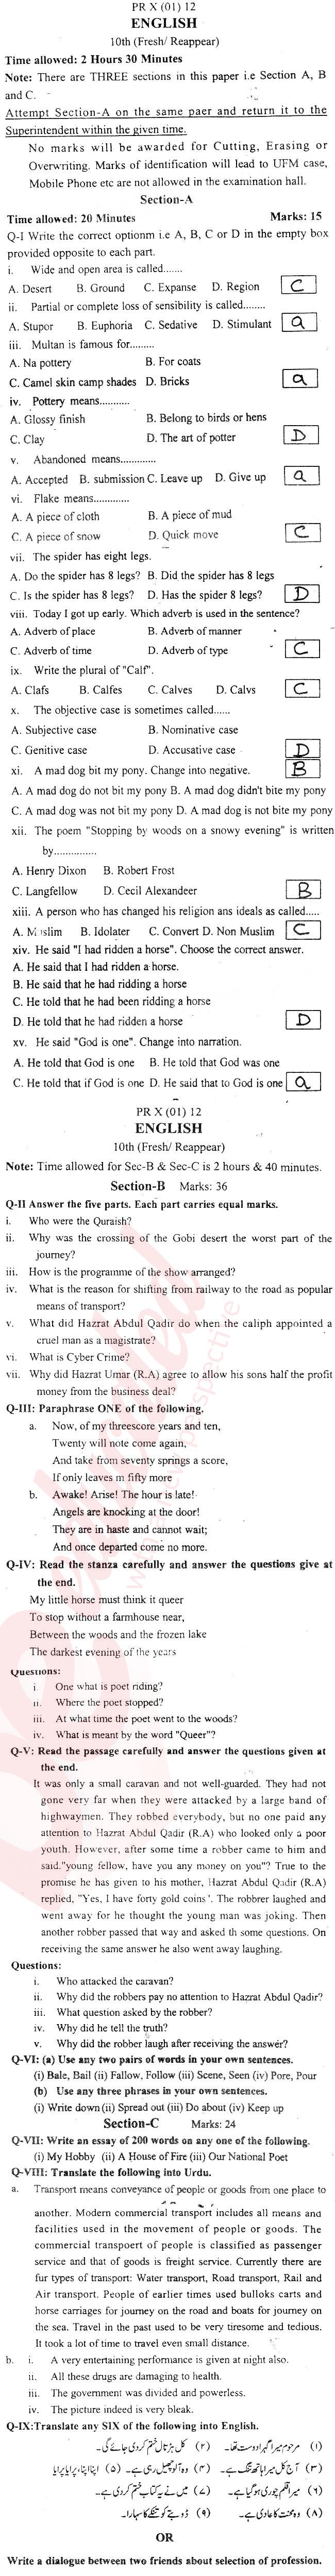 English 10th class Past Paper Group 1 BISE Malakand 2012